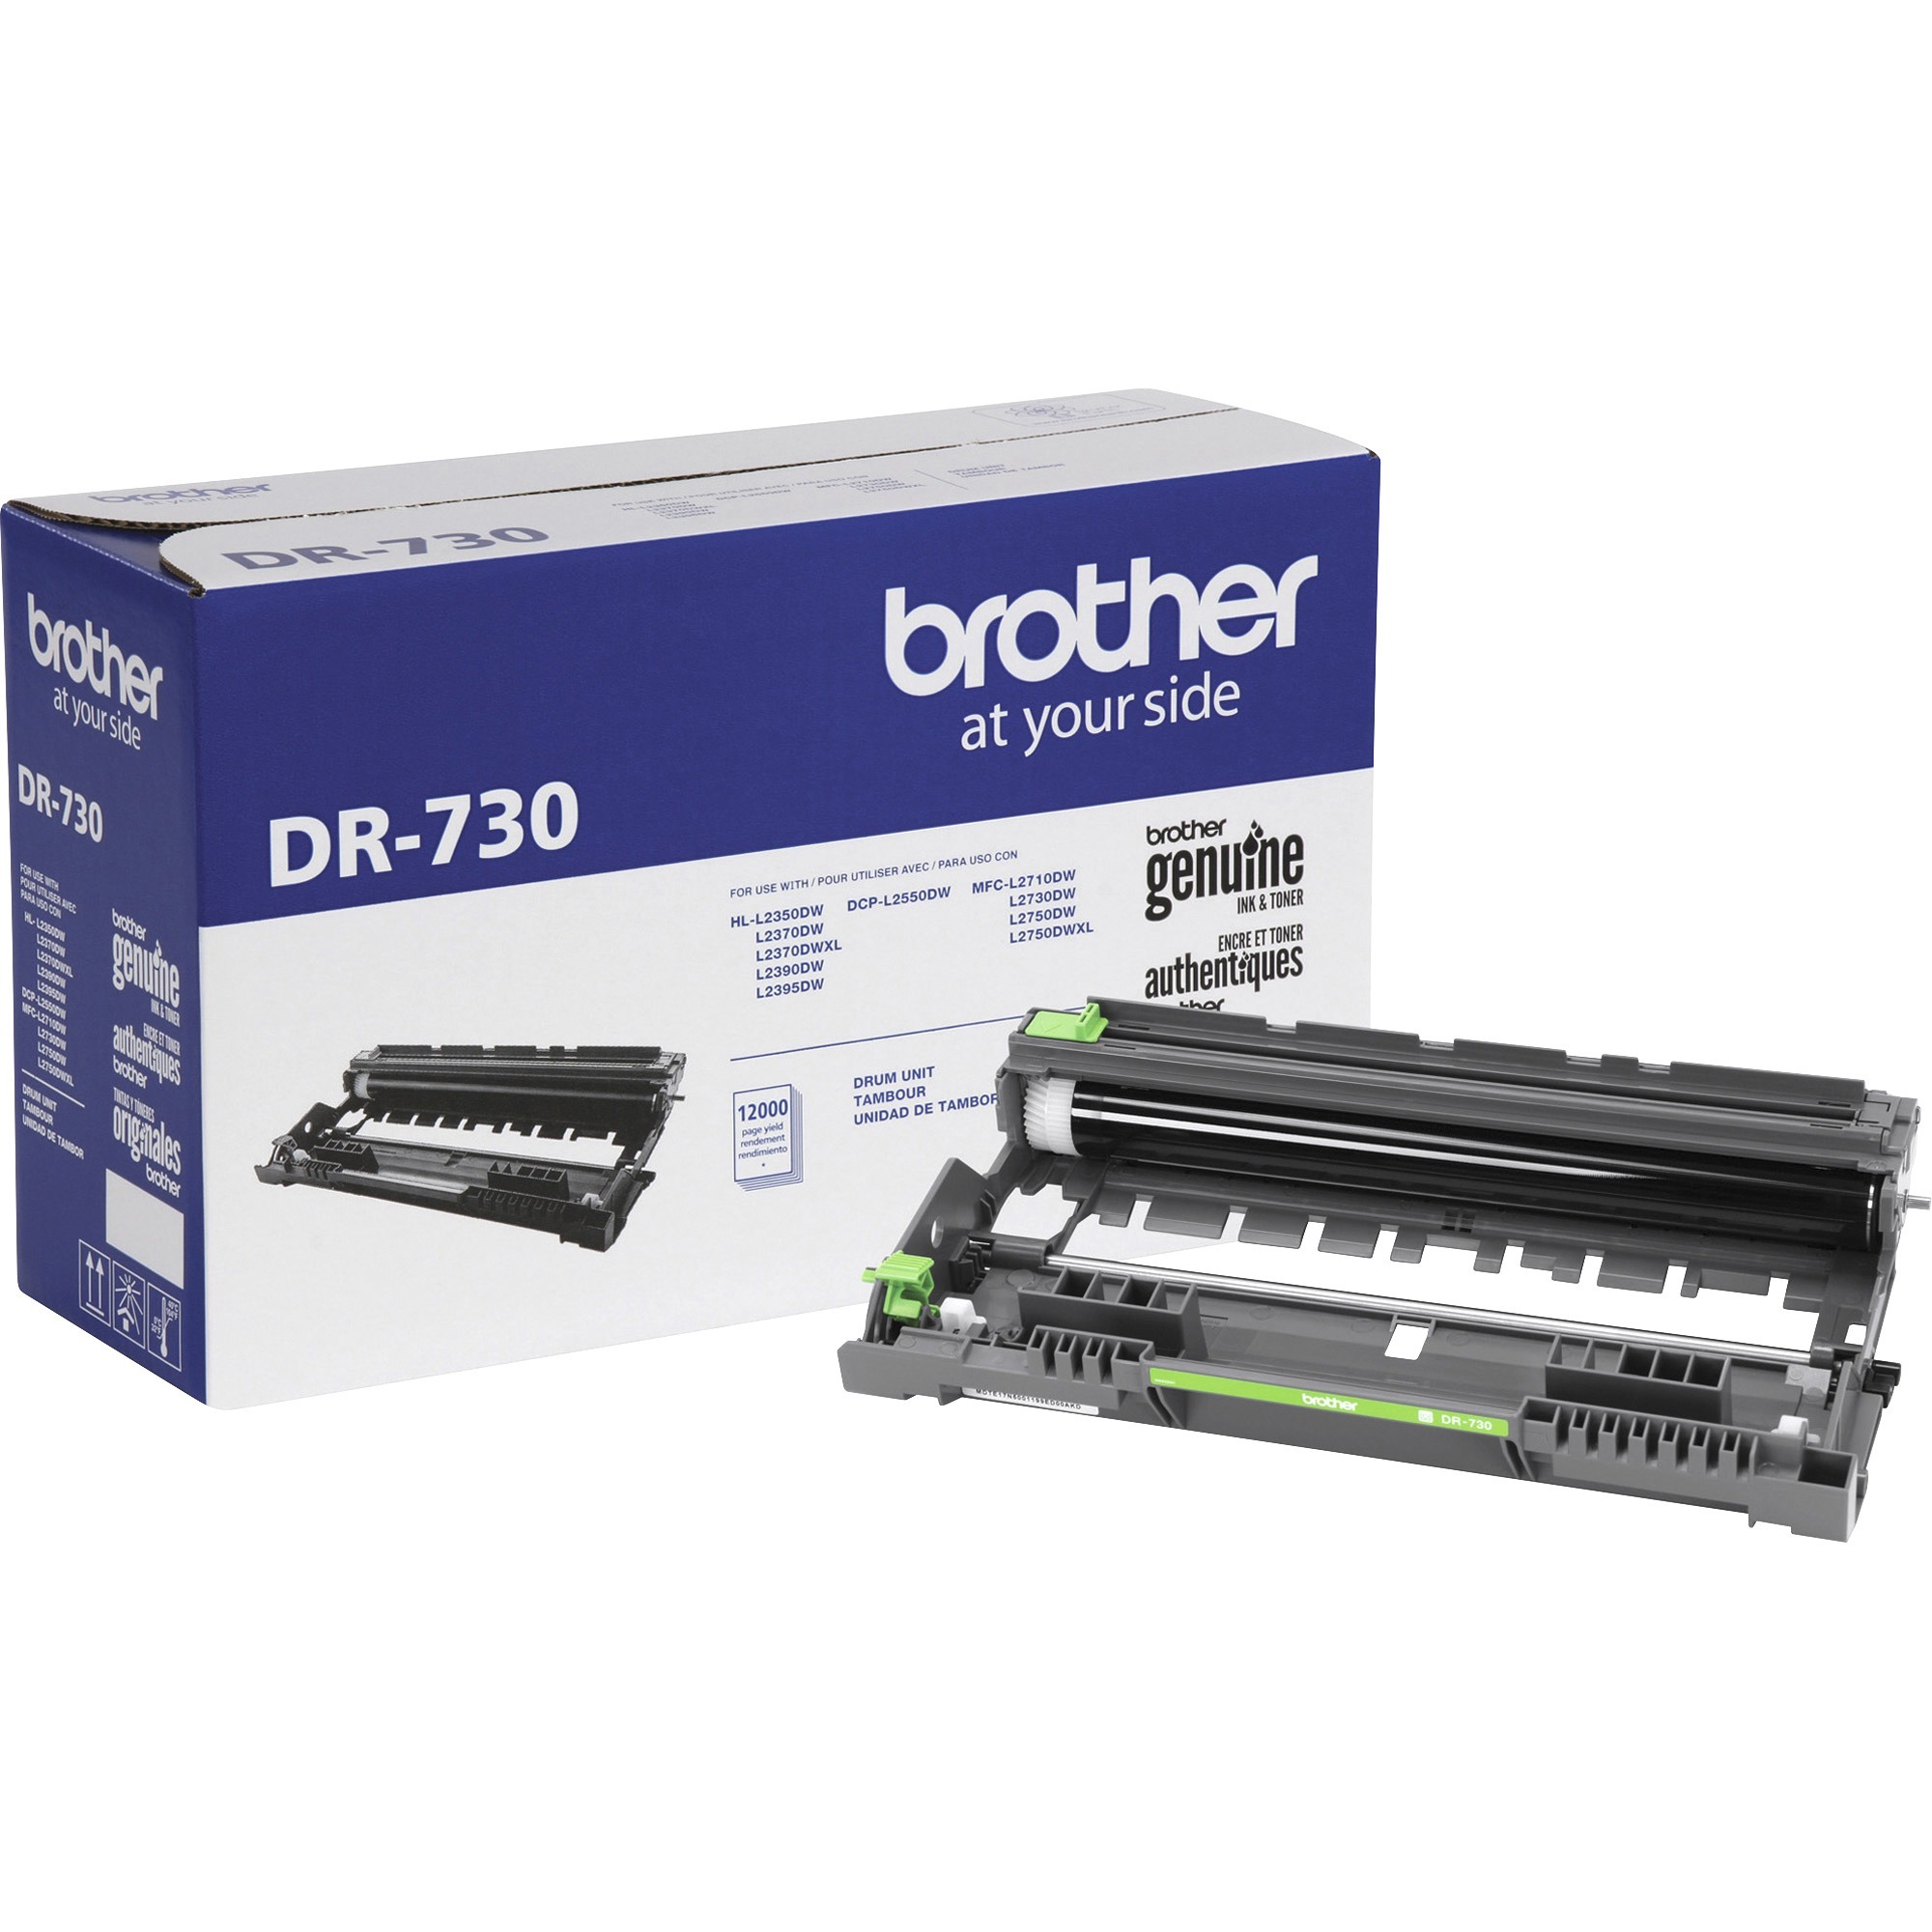 Brother MFC-L2710DW Wireless Laser Multifunction Printer - Monochrome -  Copier/Fax/Printer/Scanner - 32 ppm Mono Print - 2400 x 600 dpi Print -  Automa, Brother Industries, Ltd